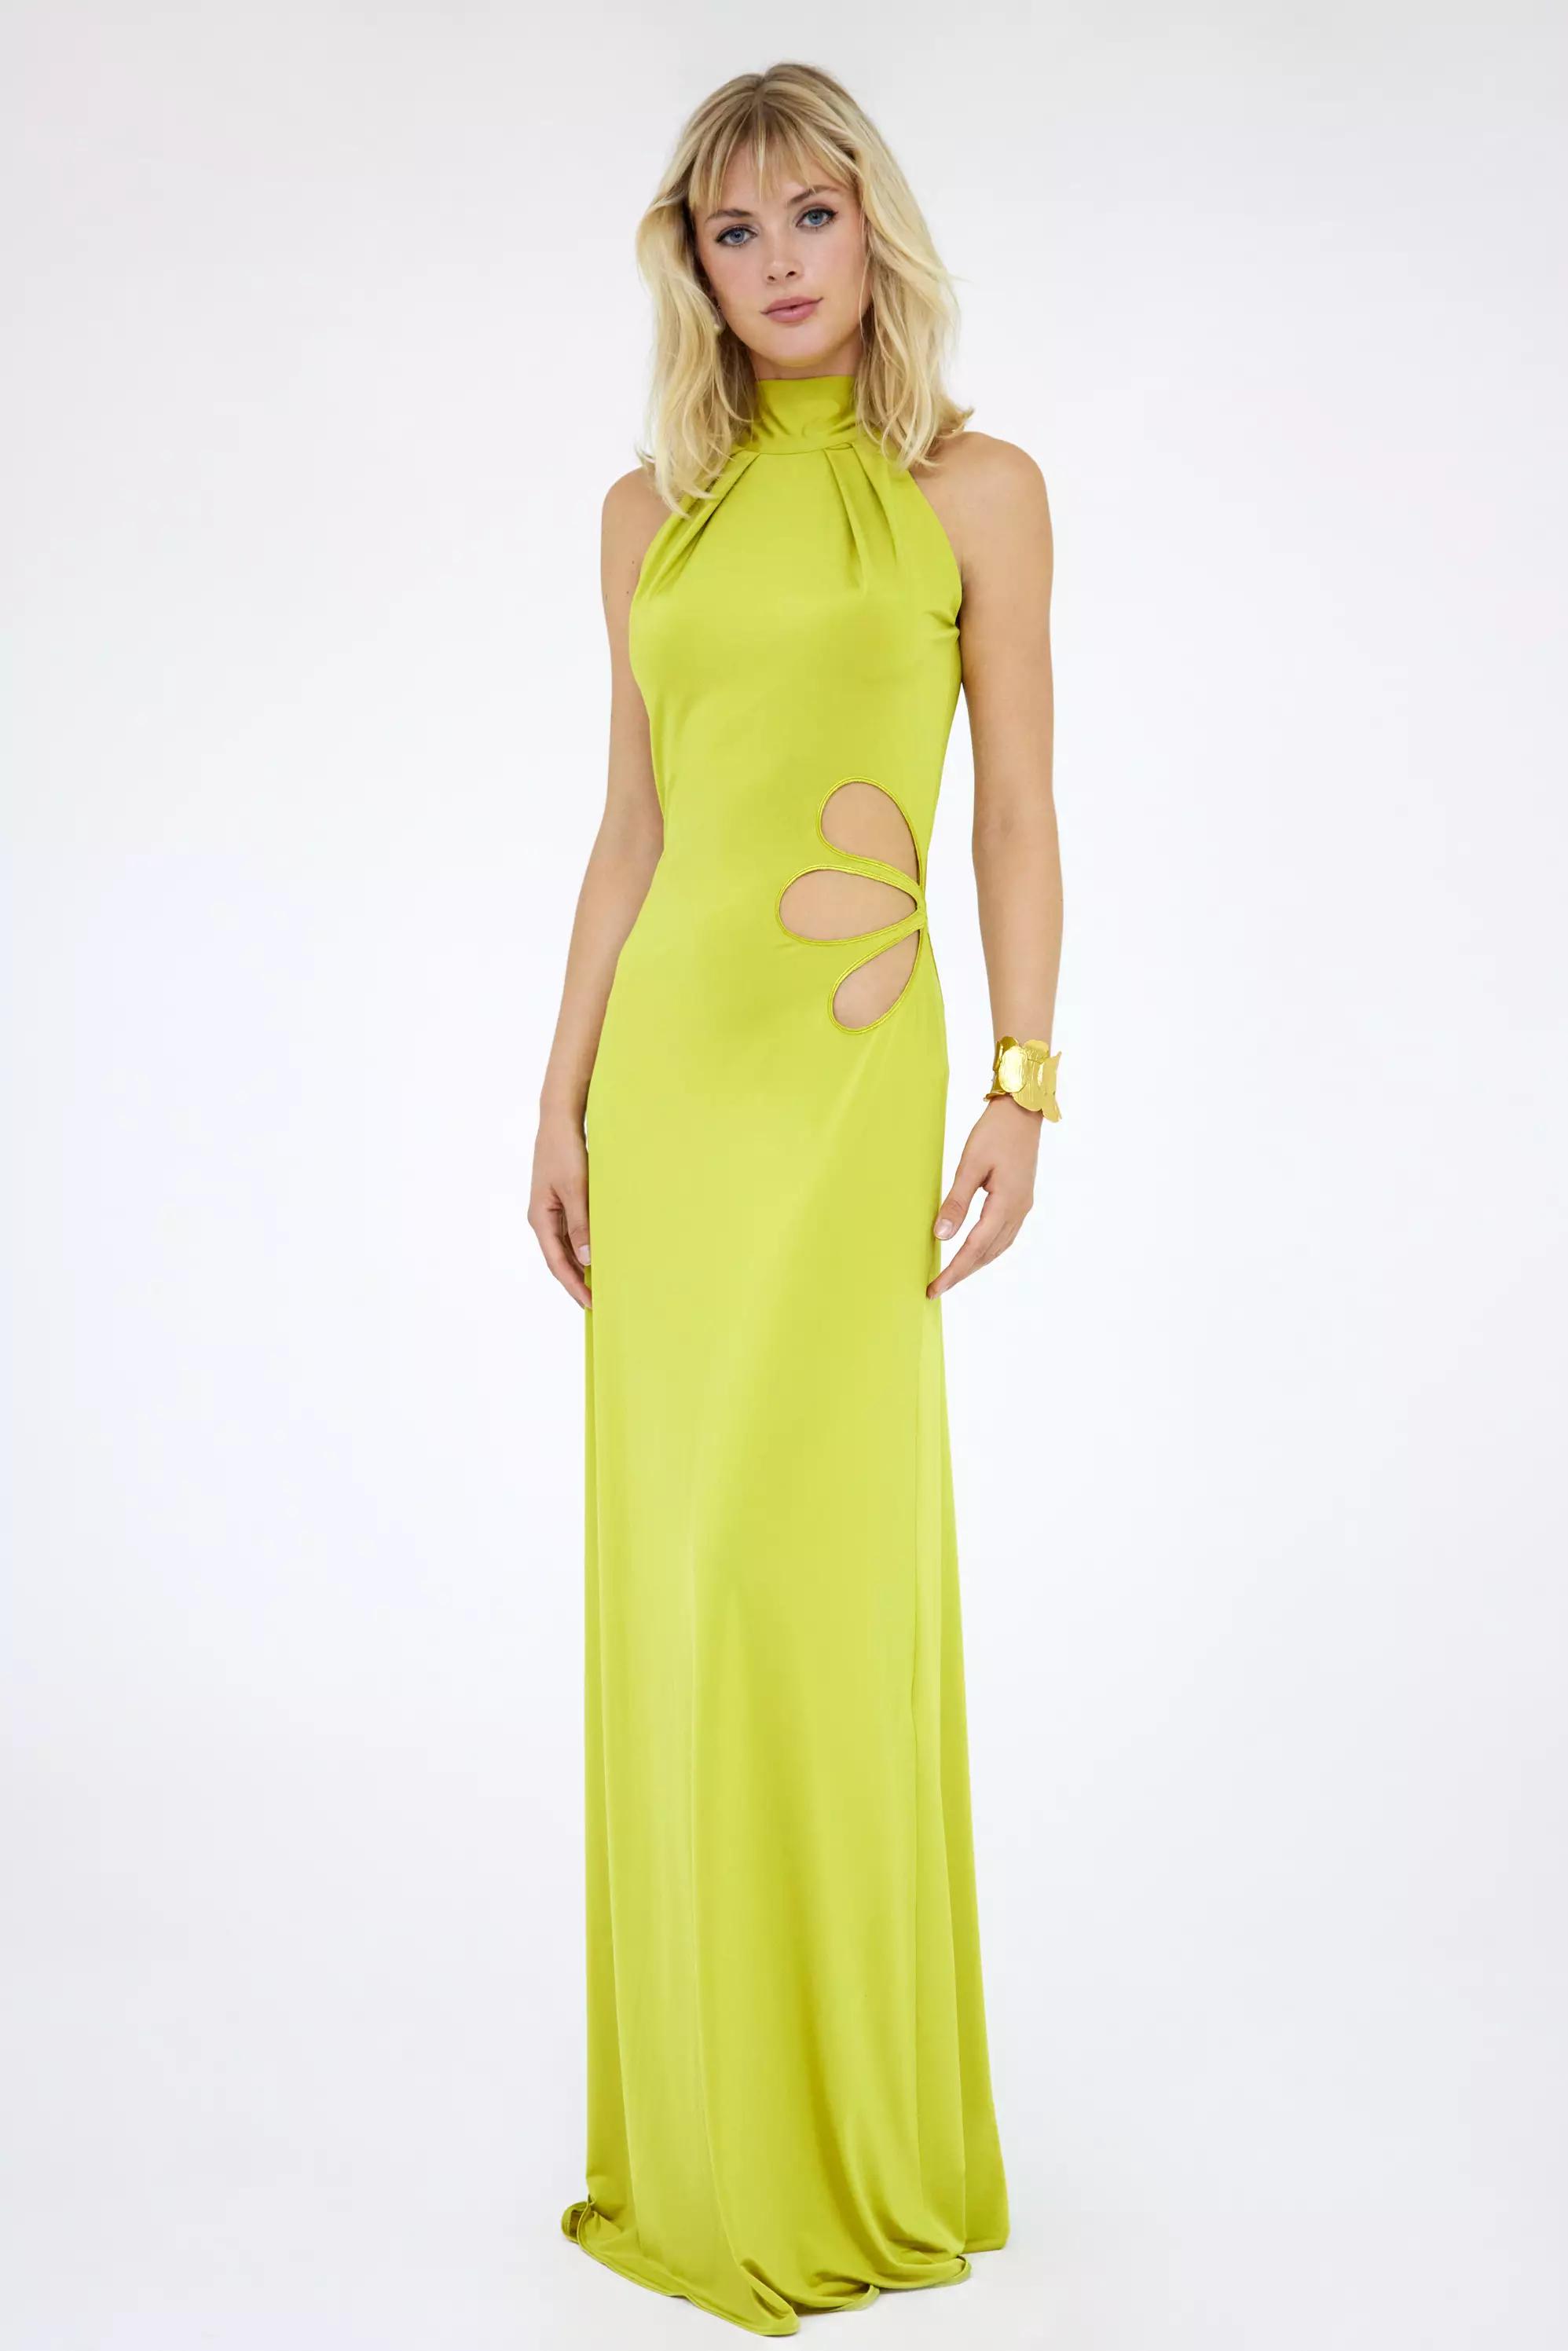 Pistachio green crepe sleeveless long dress